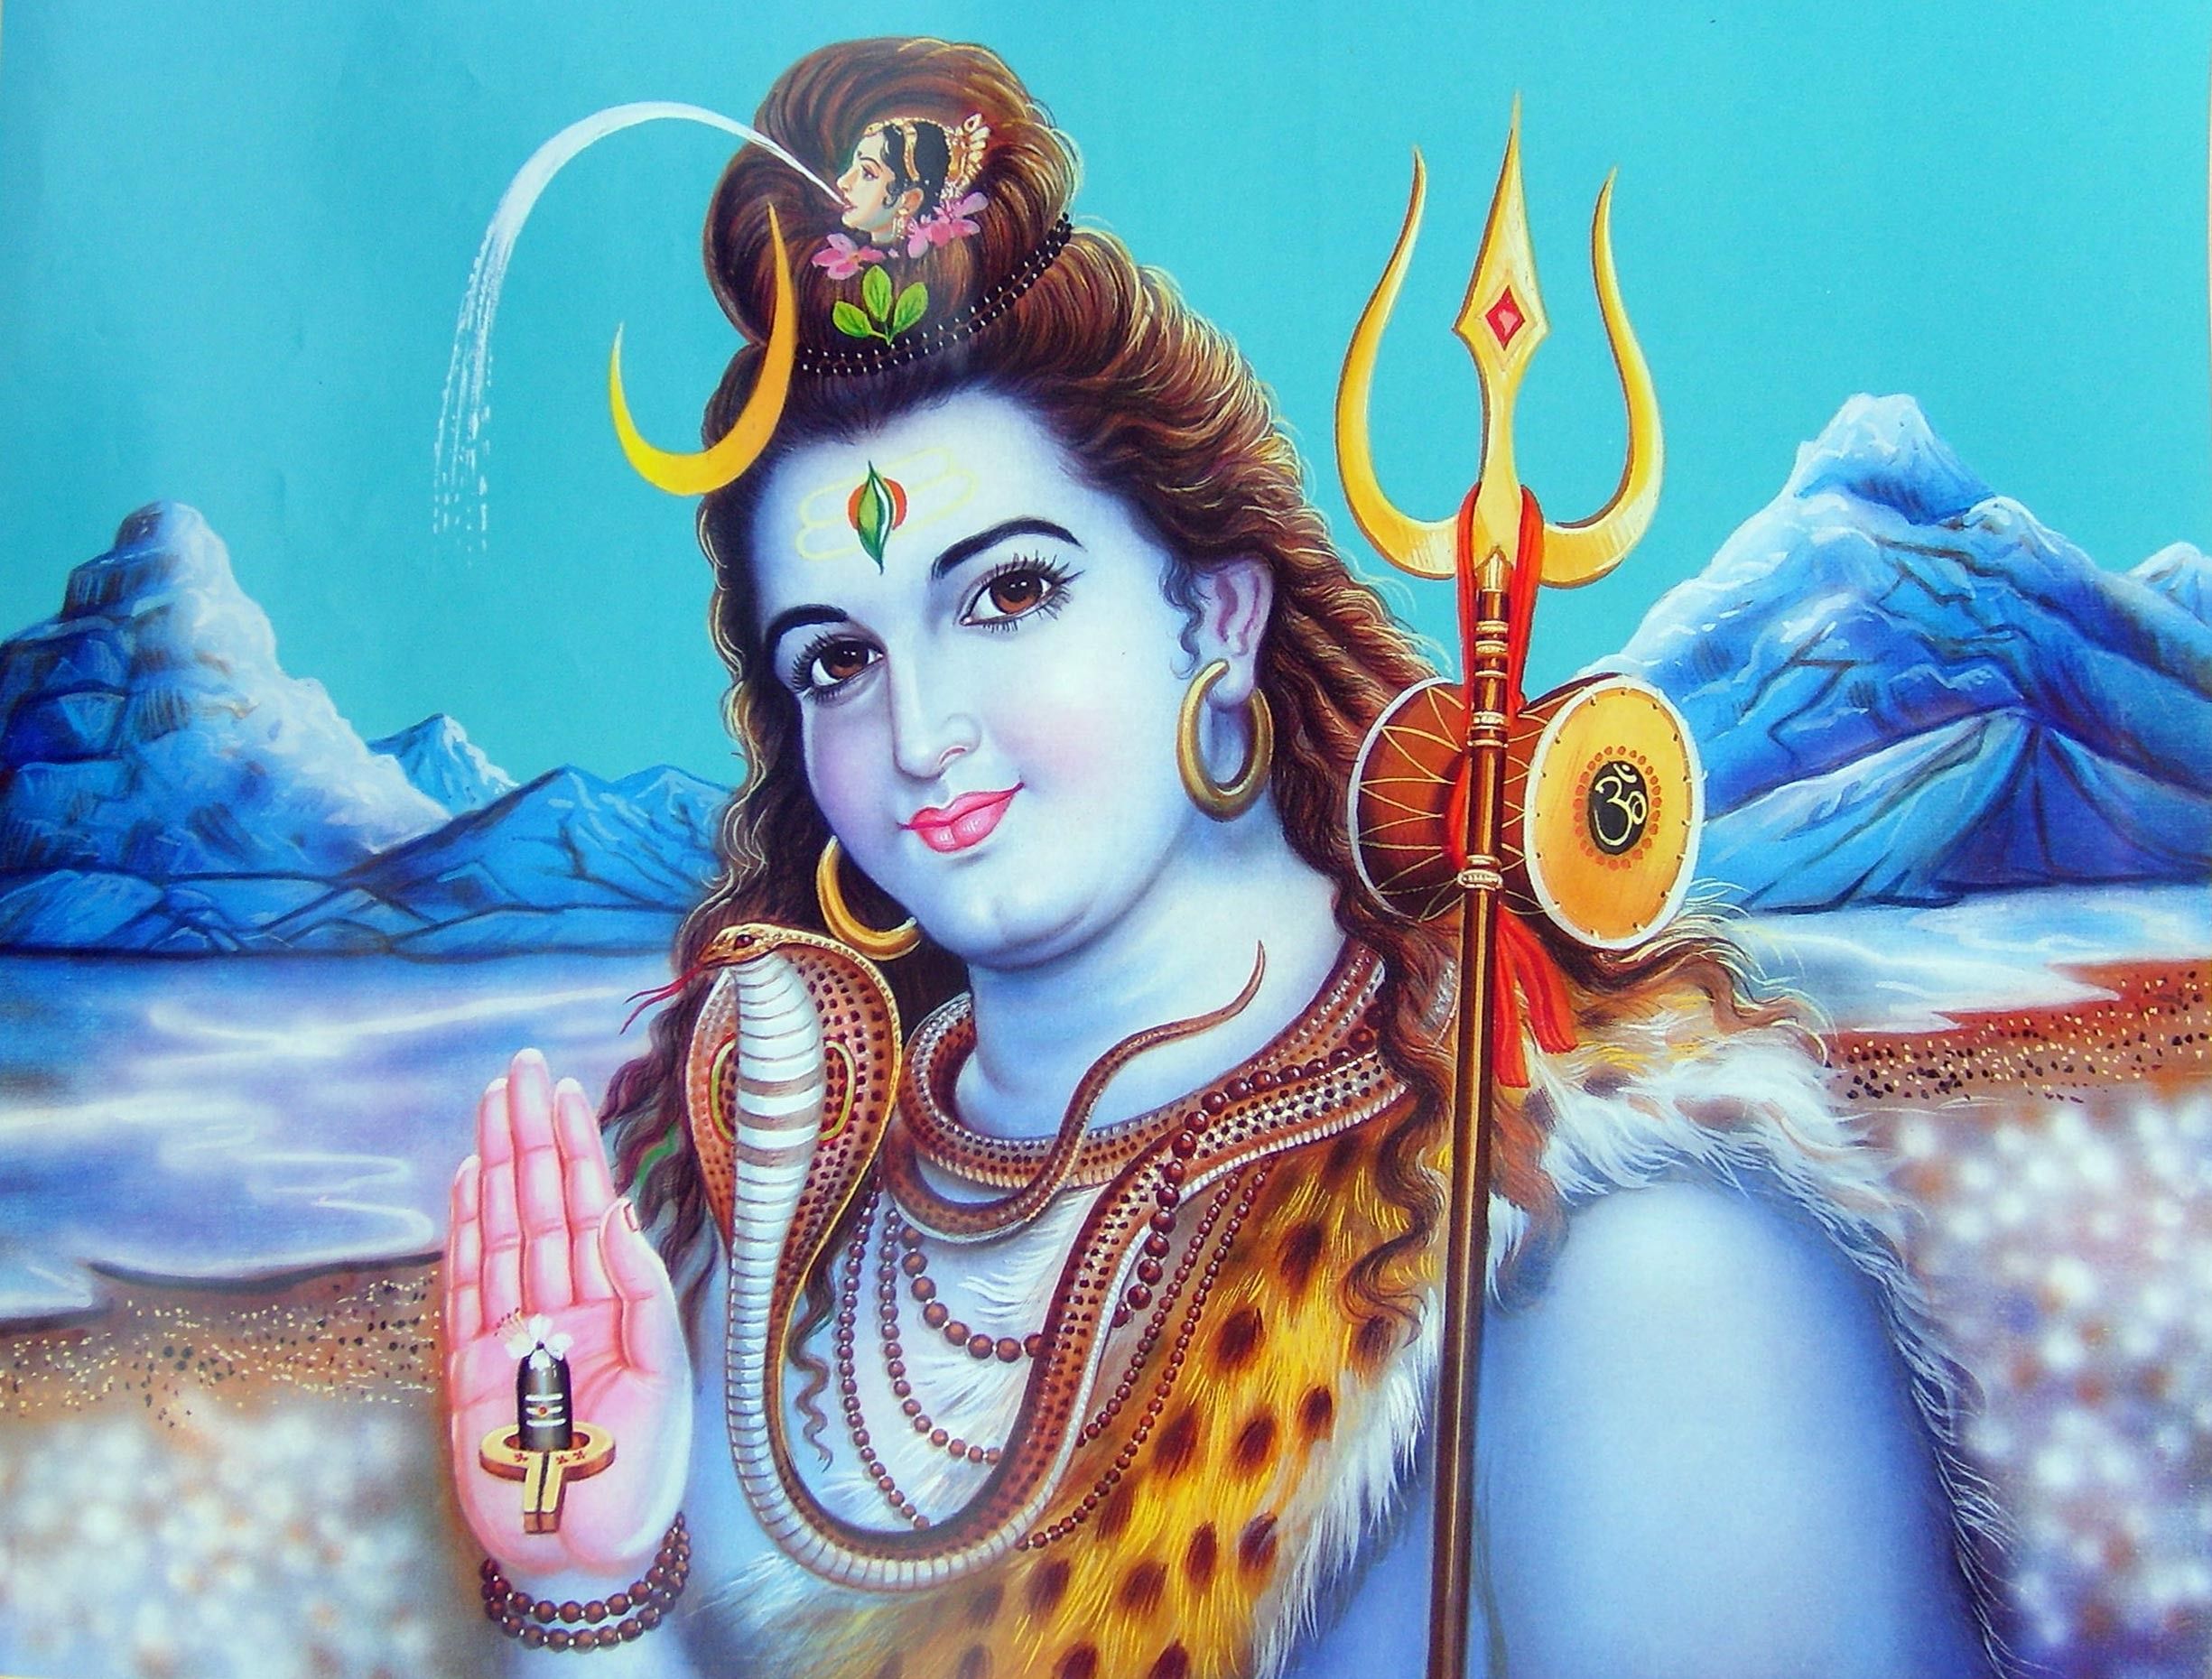 Lord Shiva Wallpaper High Resolution